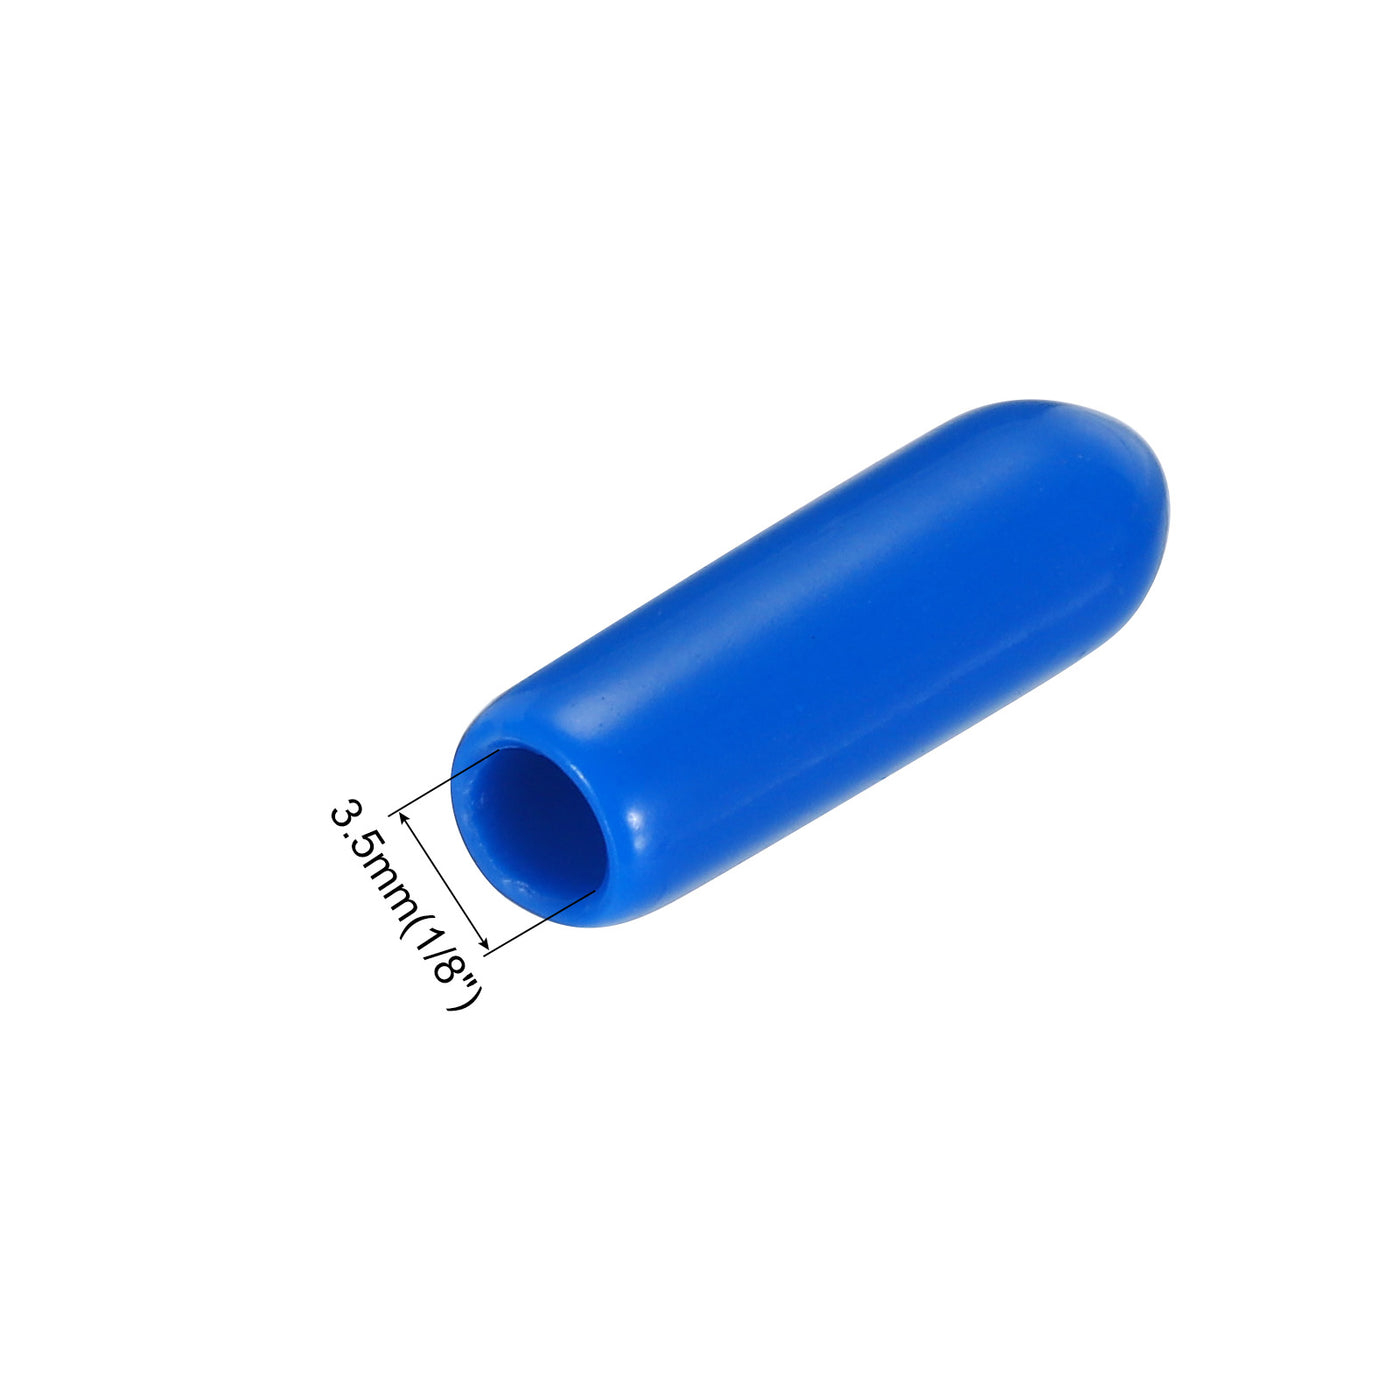 uxcell Uxcell 100pcs Rubber End Caps 3.5mm(1/8") ID Vinyl PVC Round Tube Bolt Cap Cover Screw Thread Protectors Blue